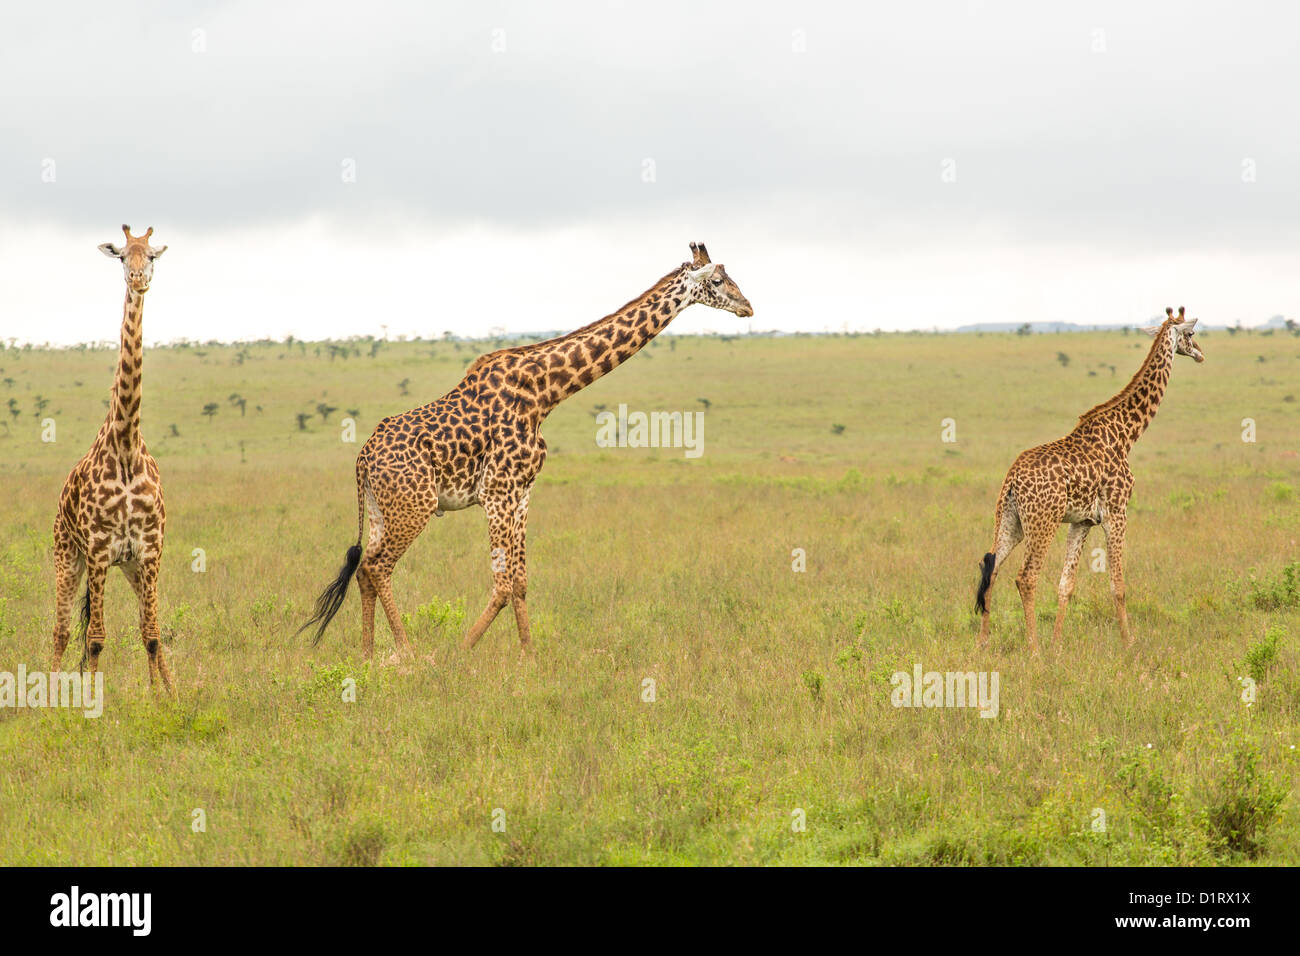 A giraffe family roaming freely at the Nairobi National Park in Kenya Stock Photo